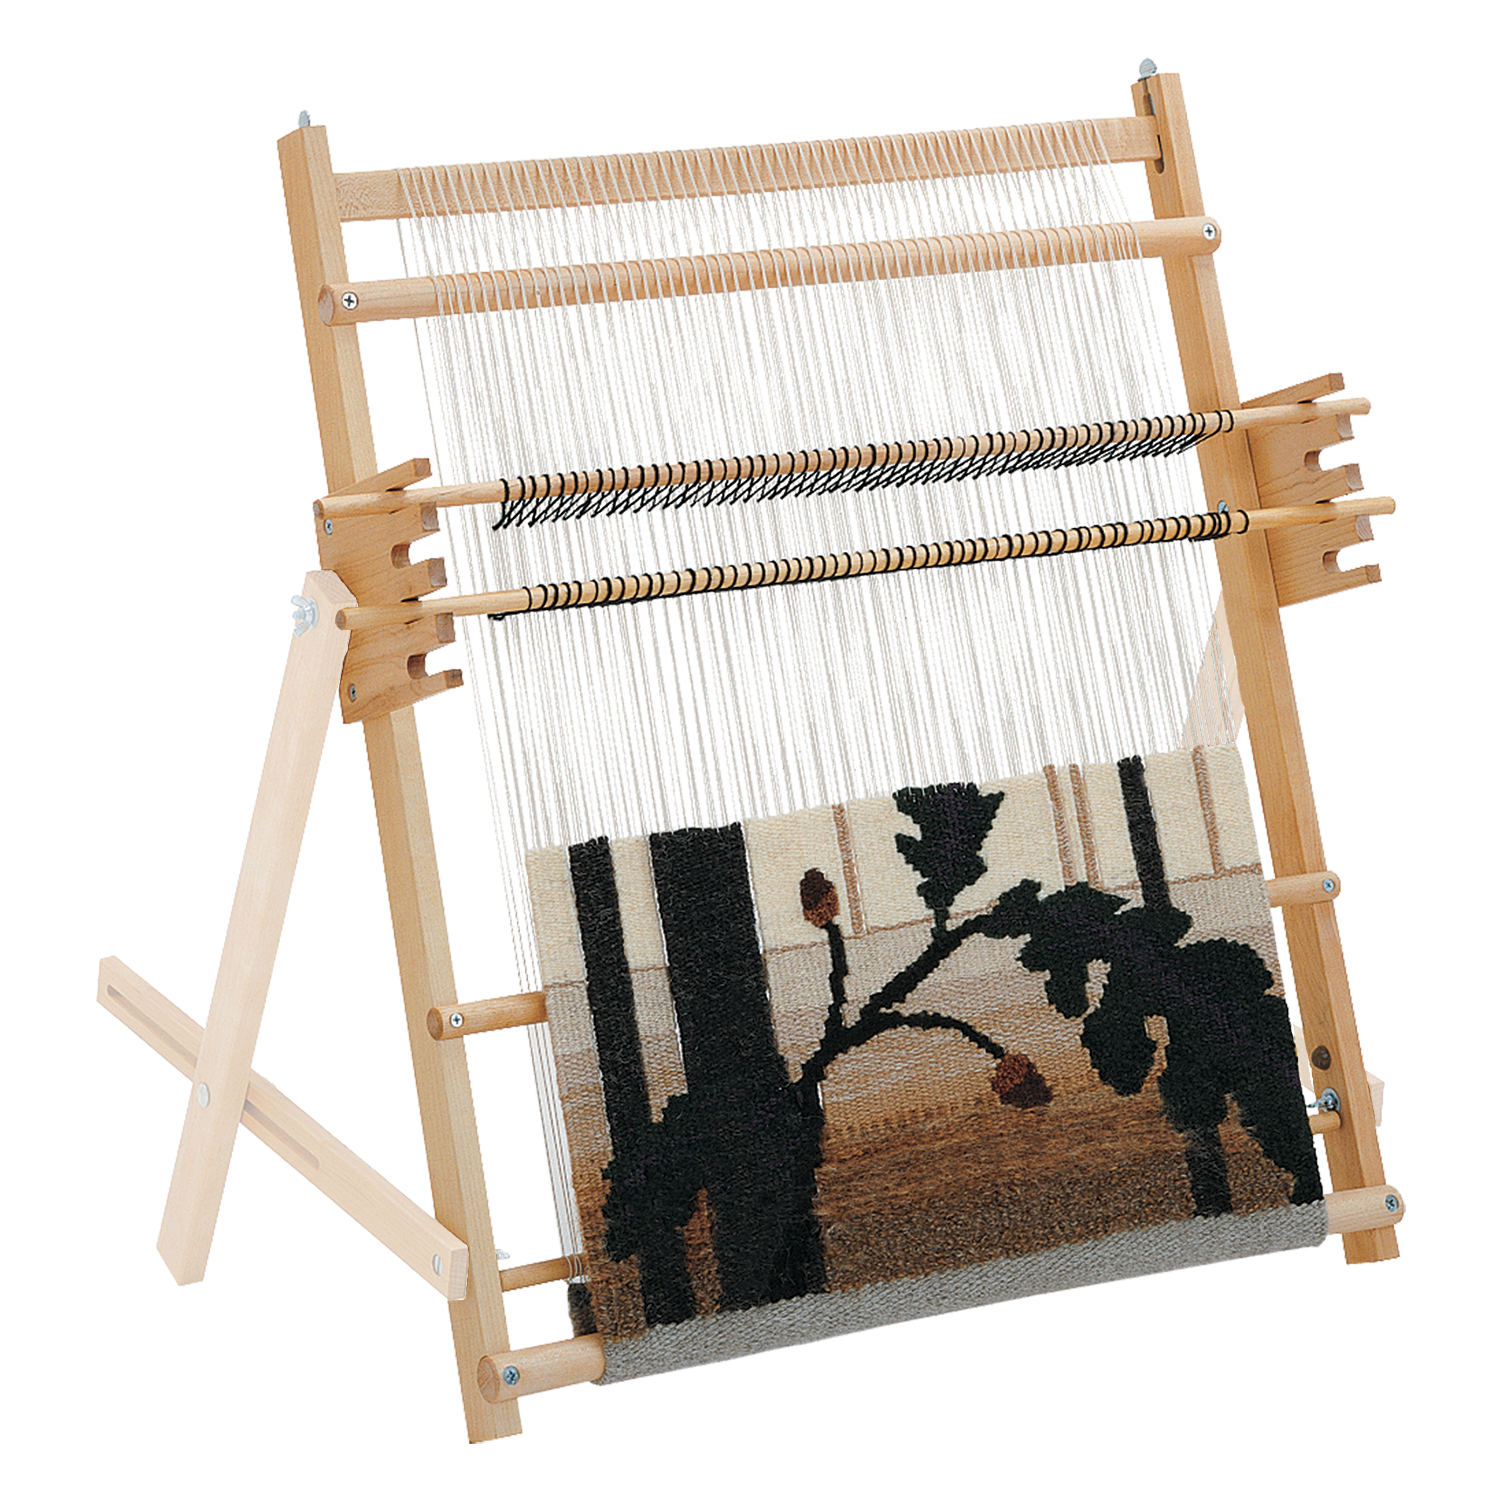 Large Wooden Weaving Loom Kit Frame Tapestry Kit Wall Decor Loom Tools